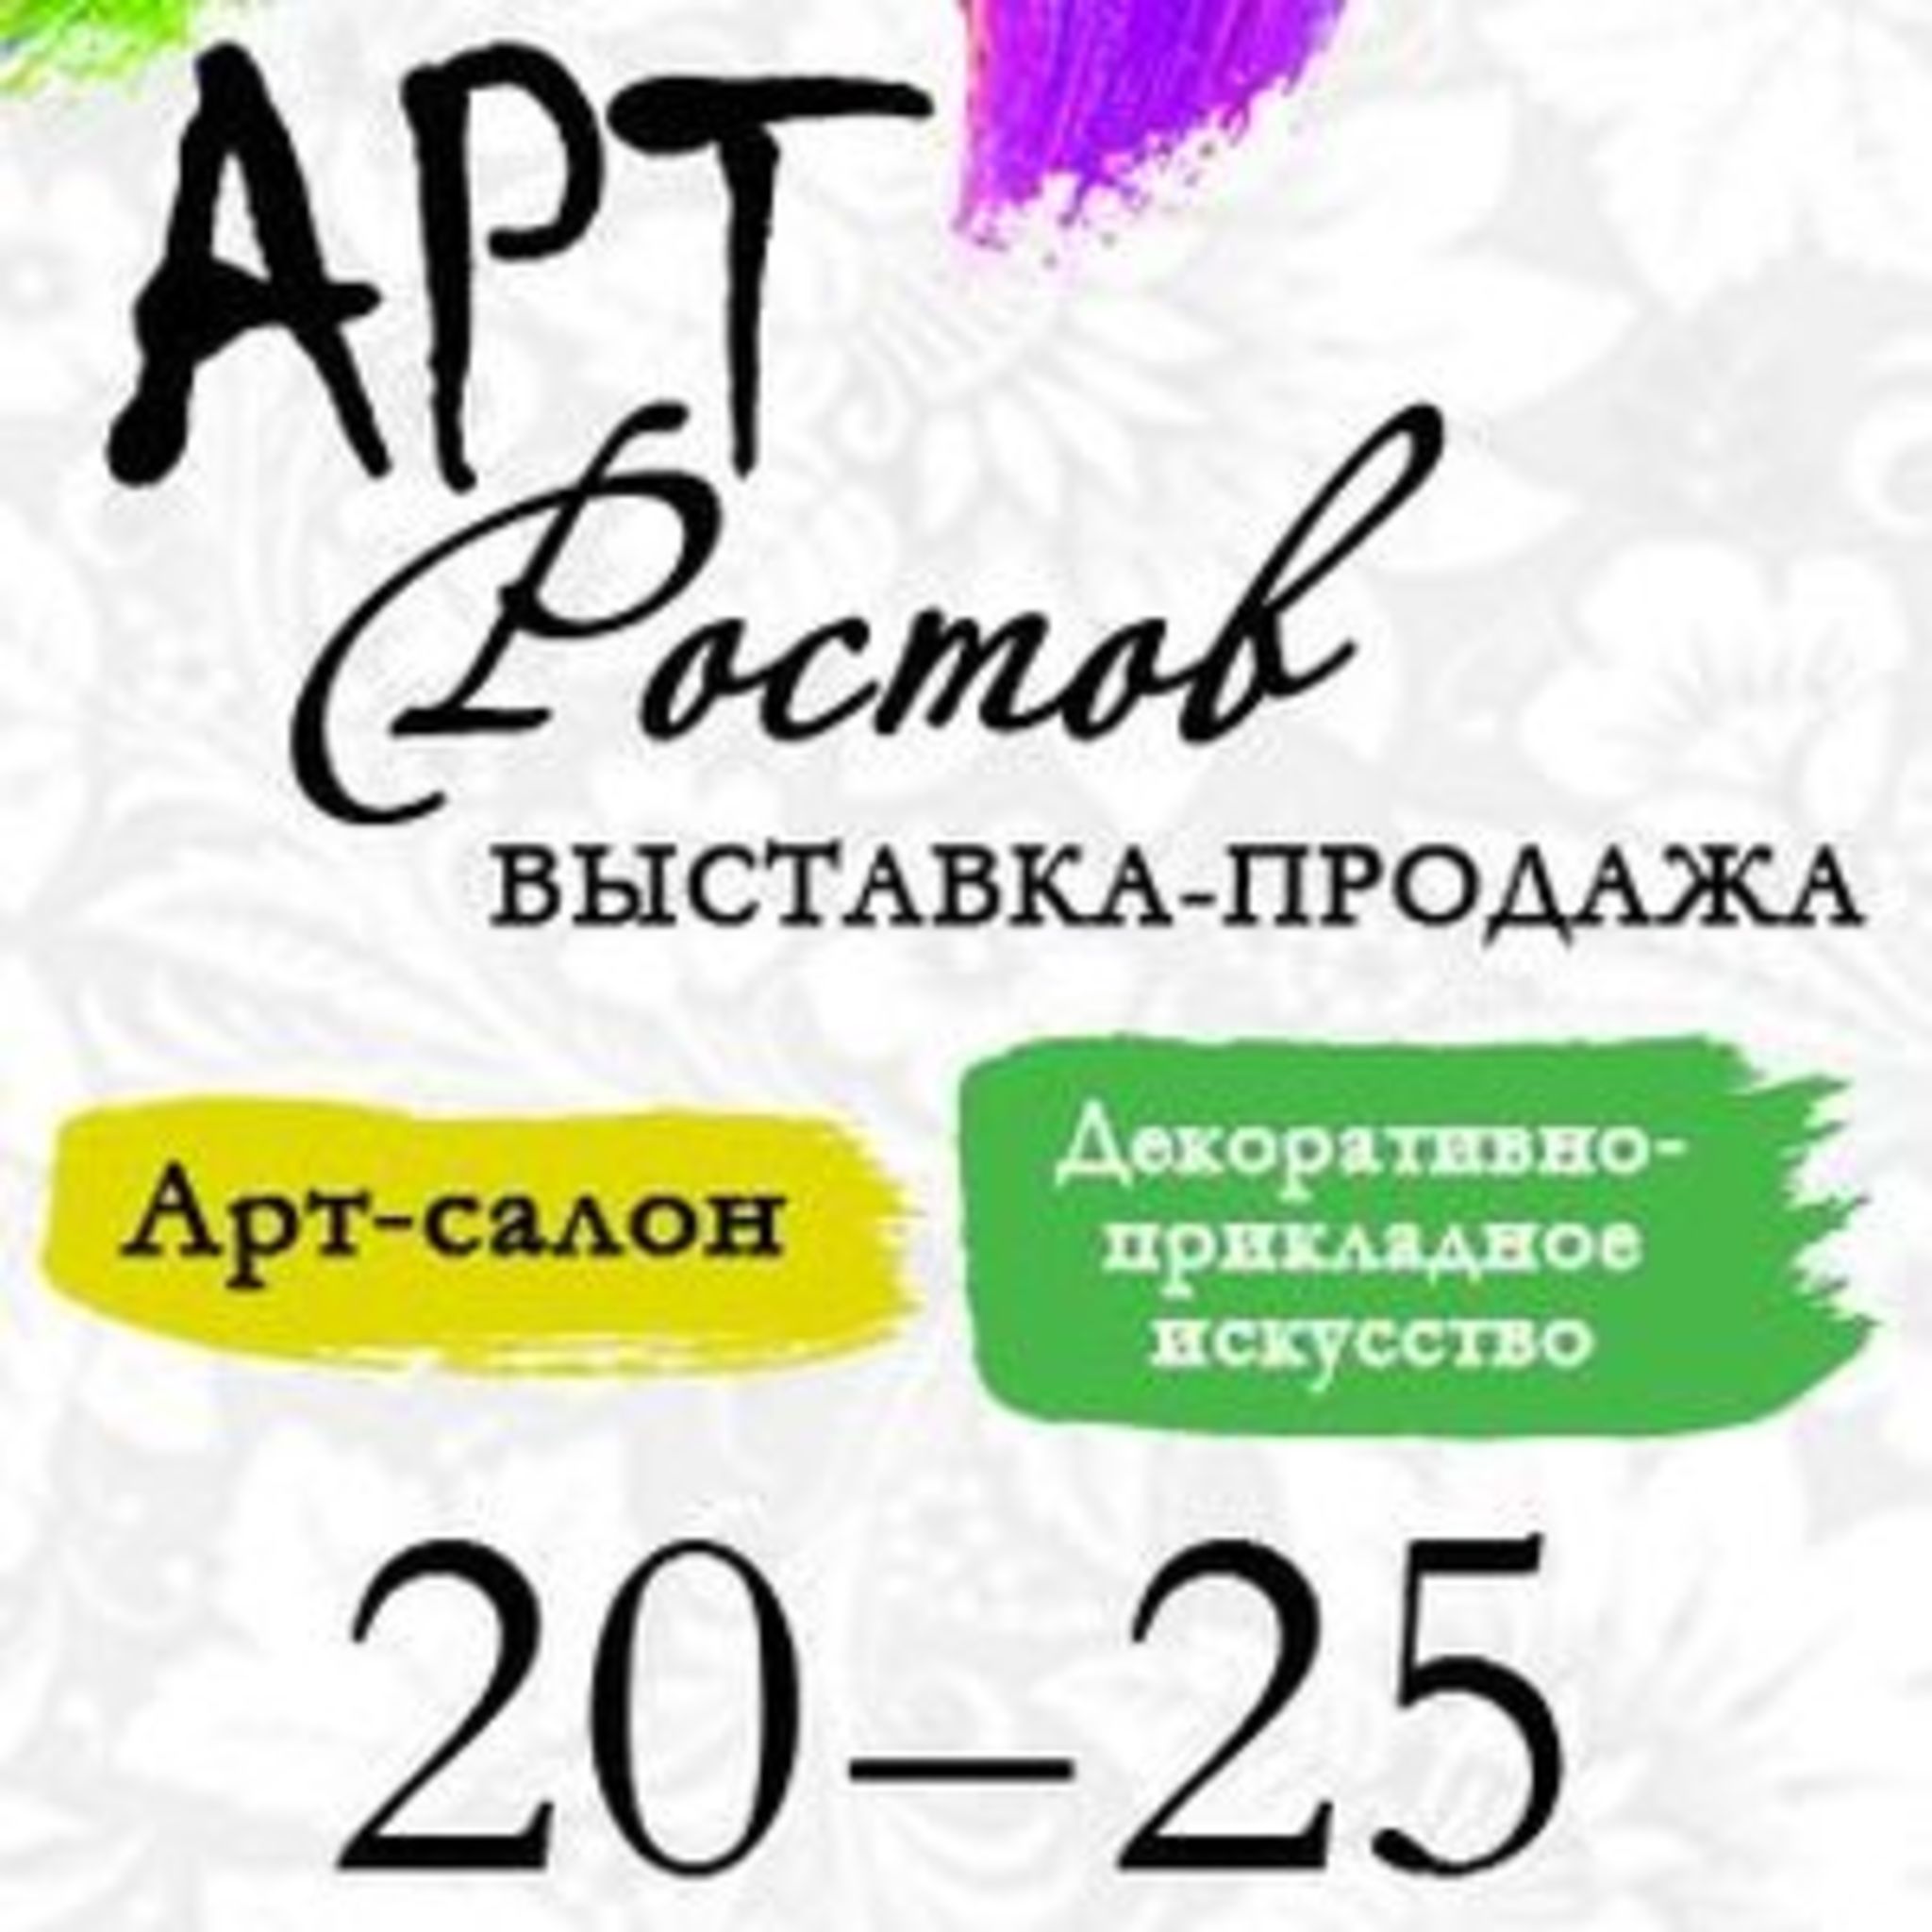 The exhibition Art-Rostov